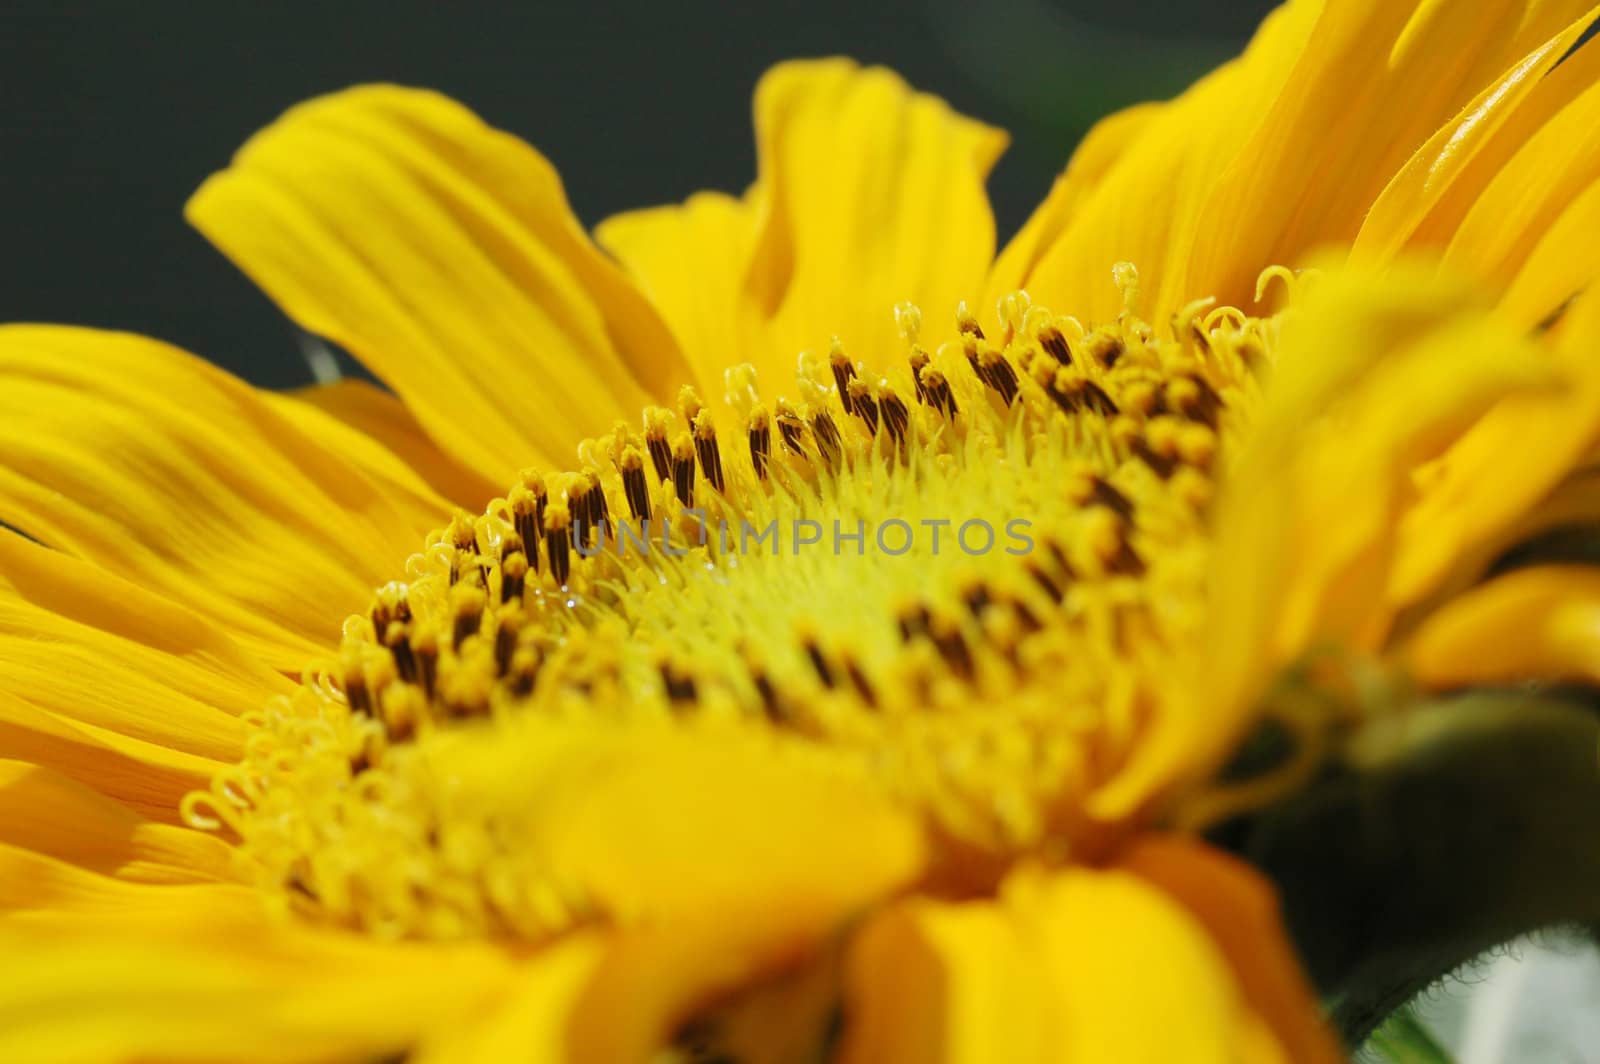 Macro close up shot of sunflower Helianthus annuus